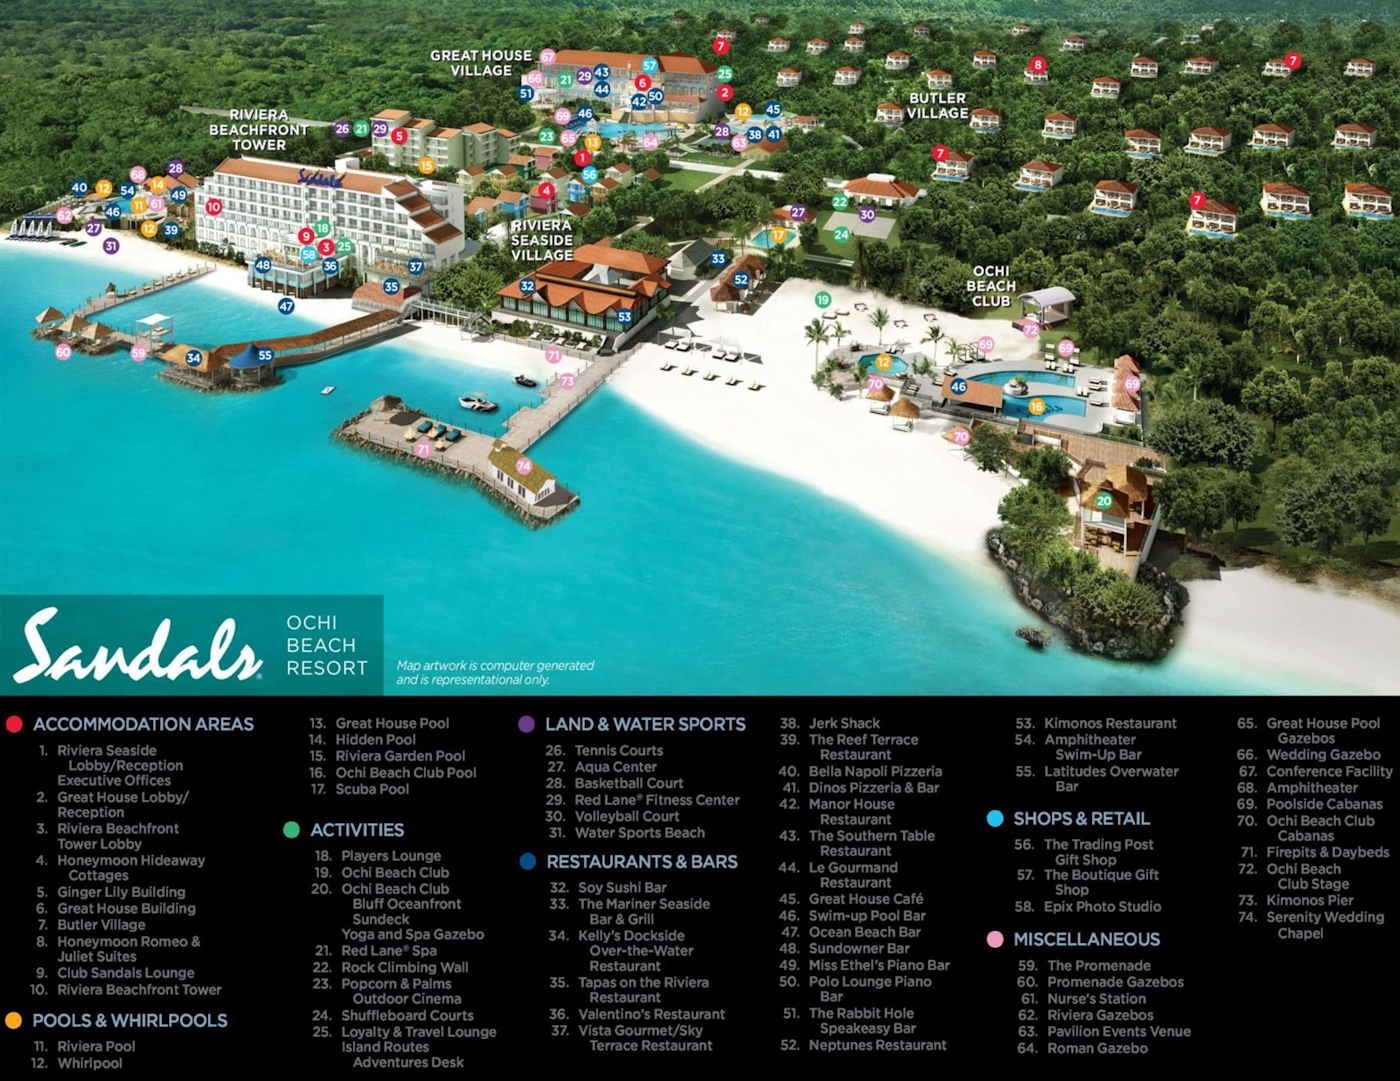 sandals barbados resort map